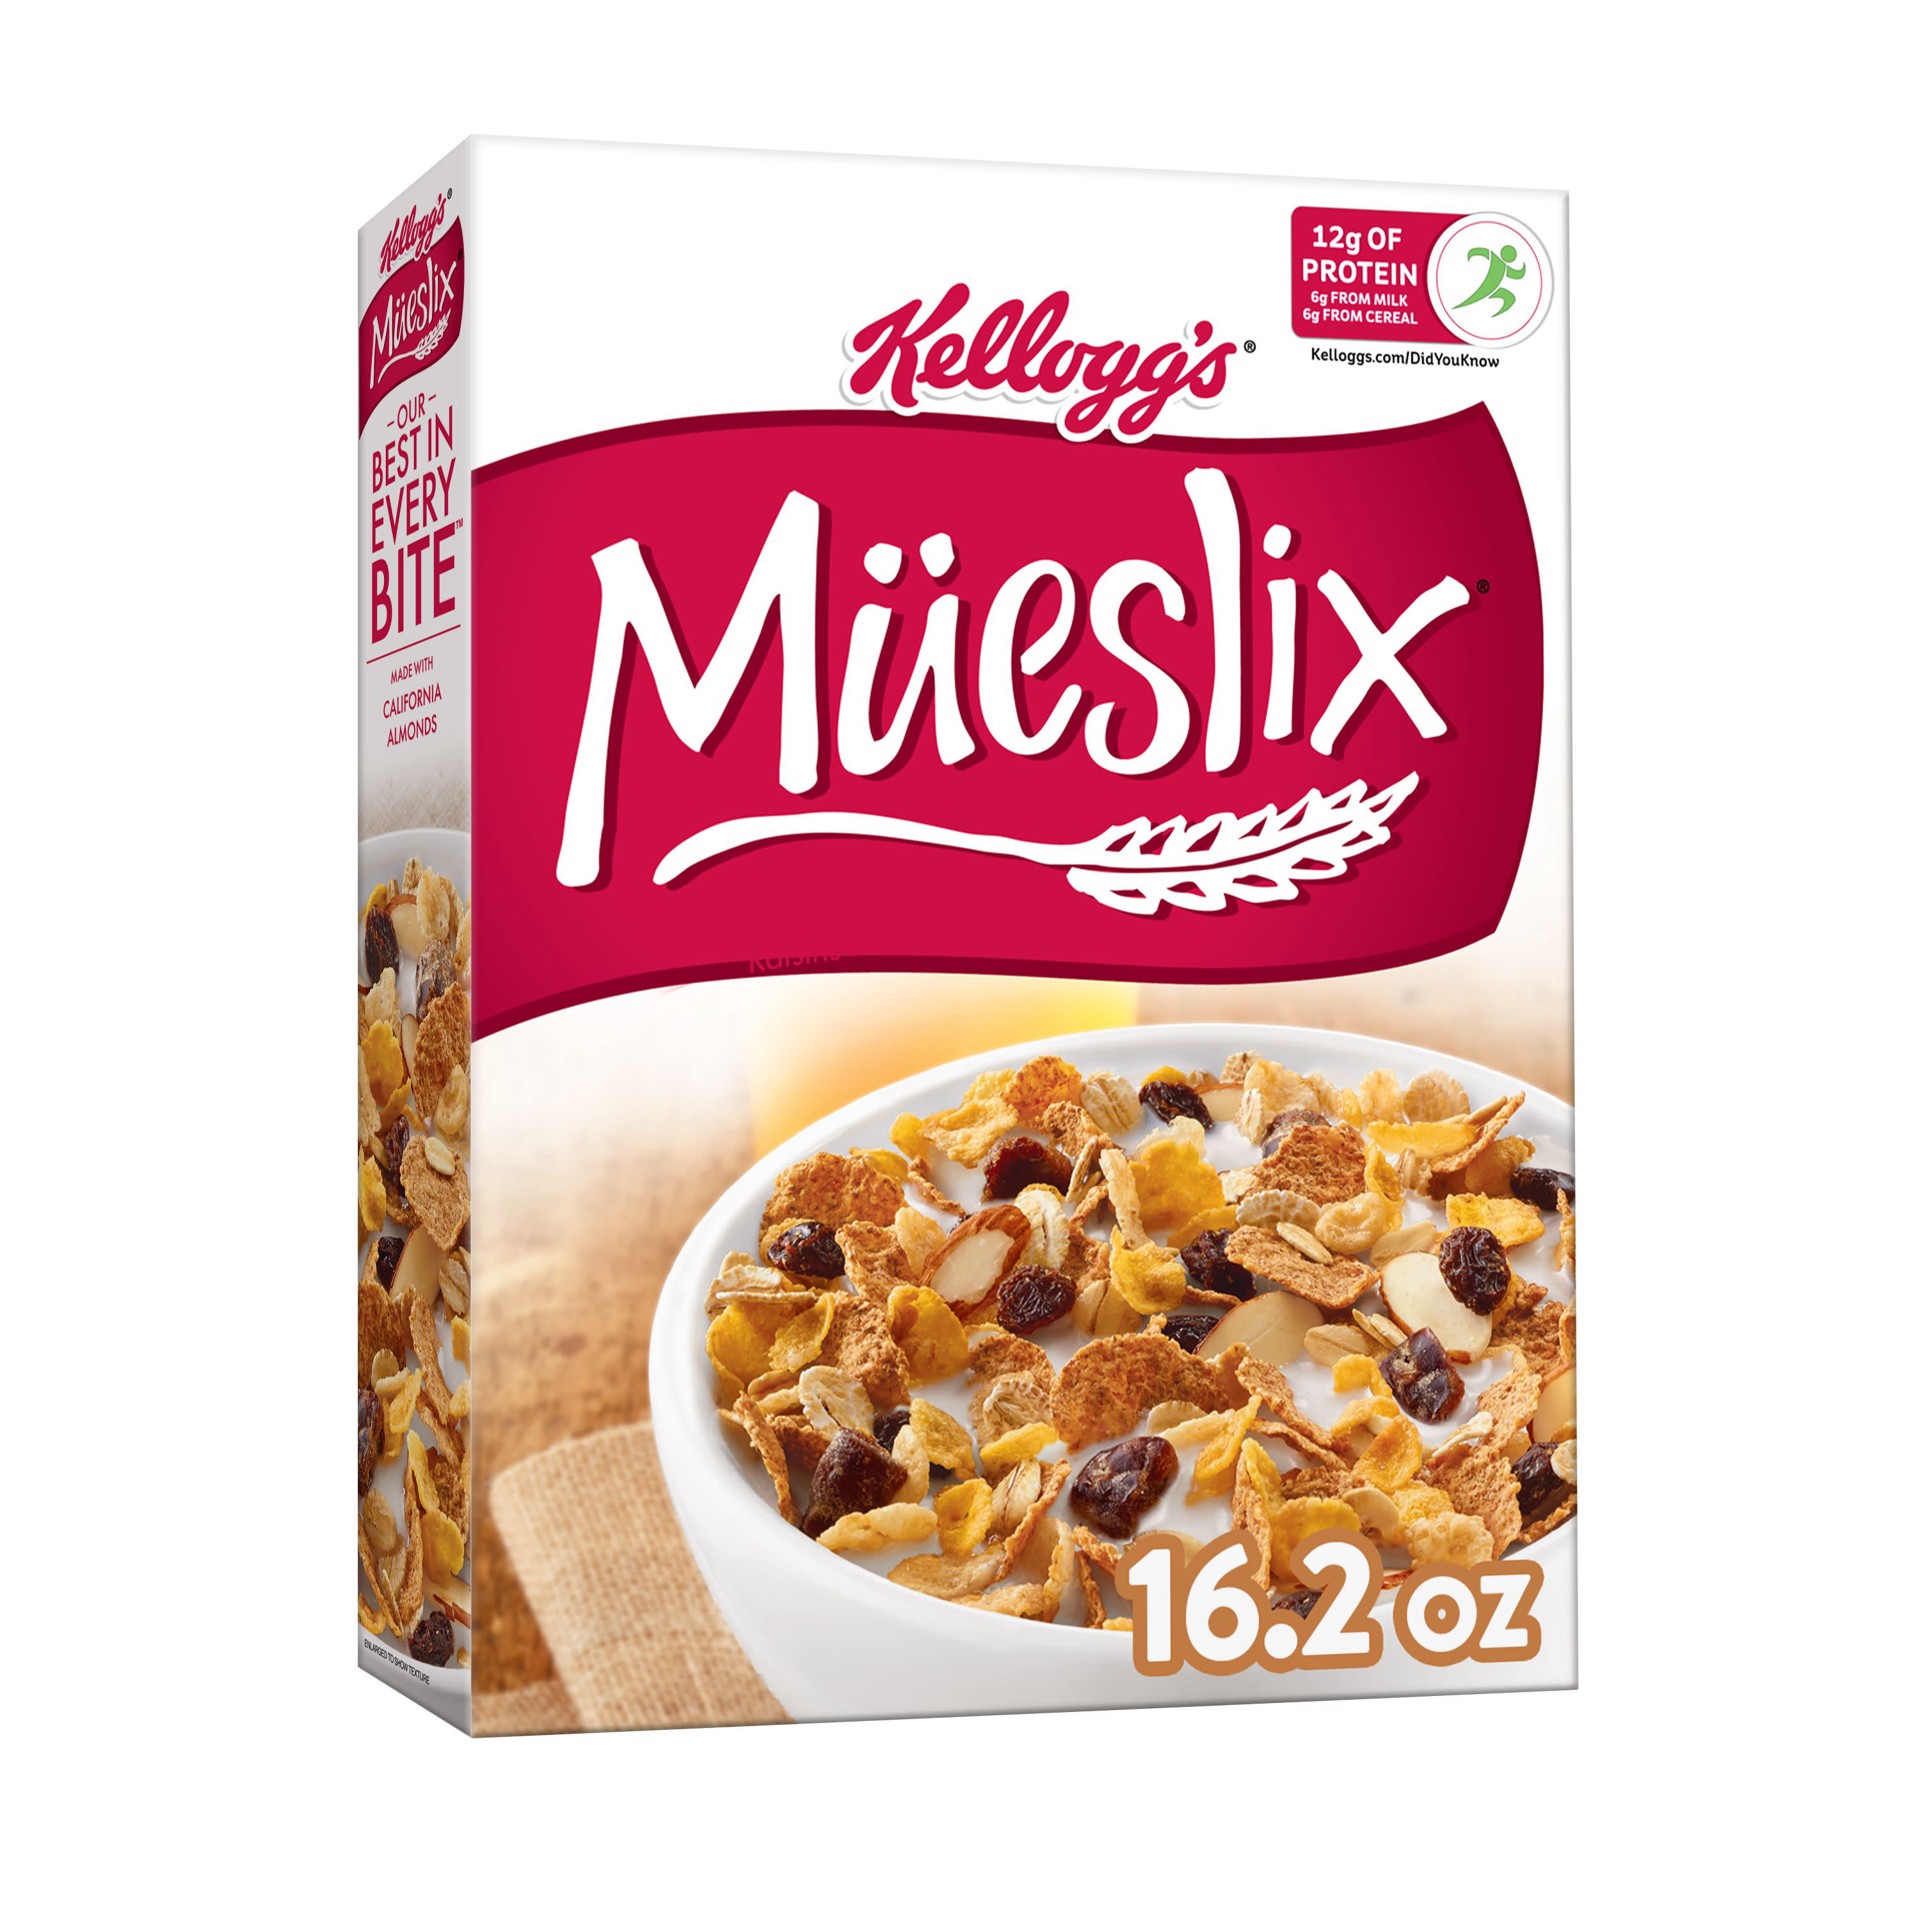 slide 1 of 7, Mueslix Kellogg's Mueslix Cold Breakfast Cereal, Fiber Cereal, 12g Protein, Original, 16.2oz Box, 1 Box, 16.2 oz